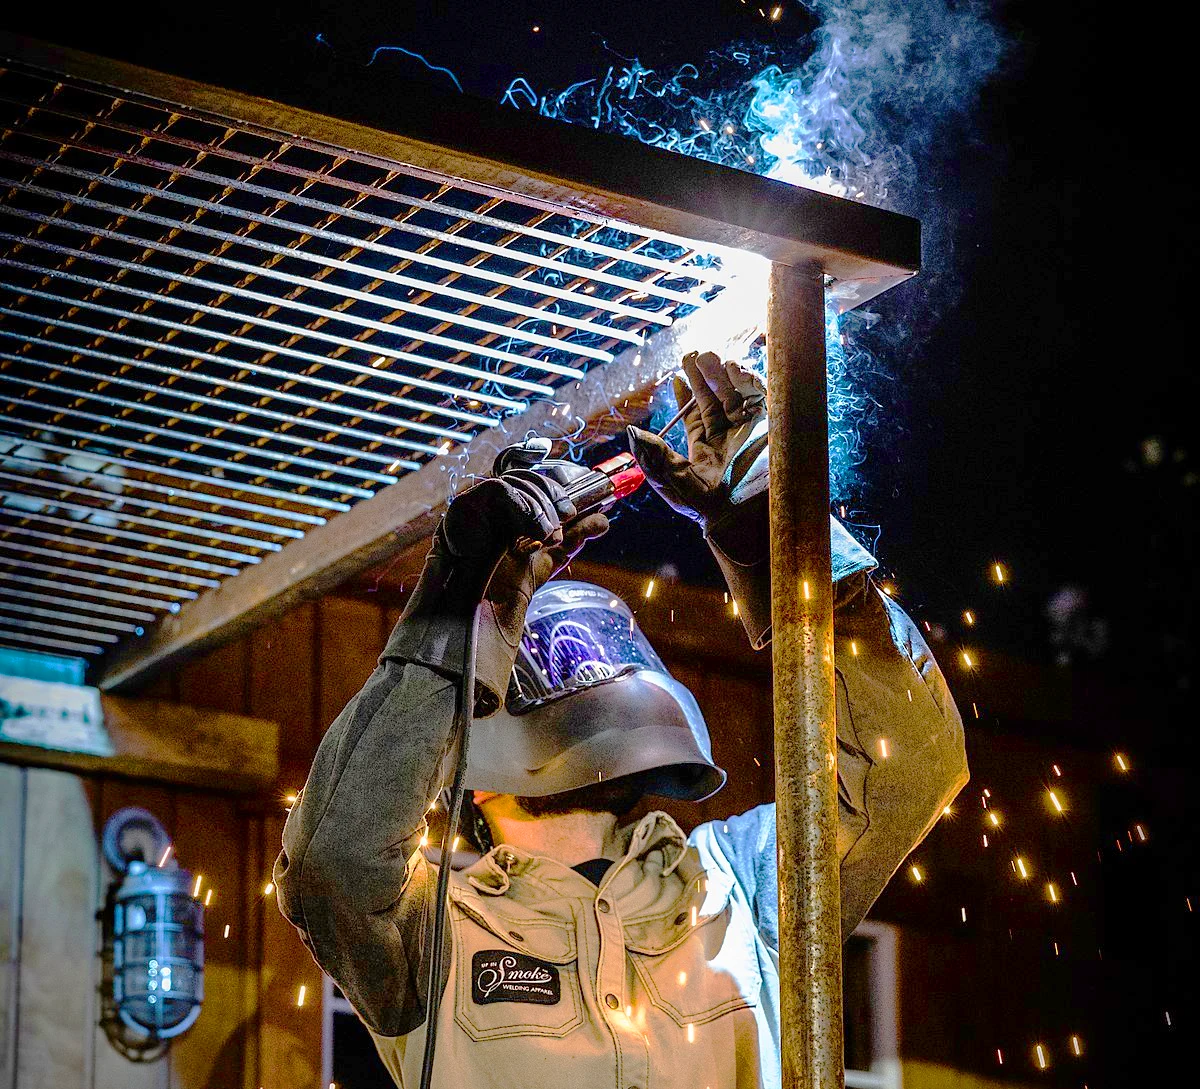 Image of a welder welding in overhead position with stick welder.